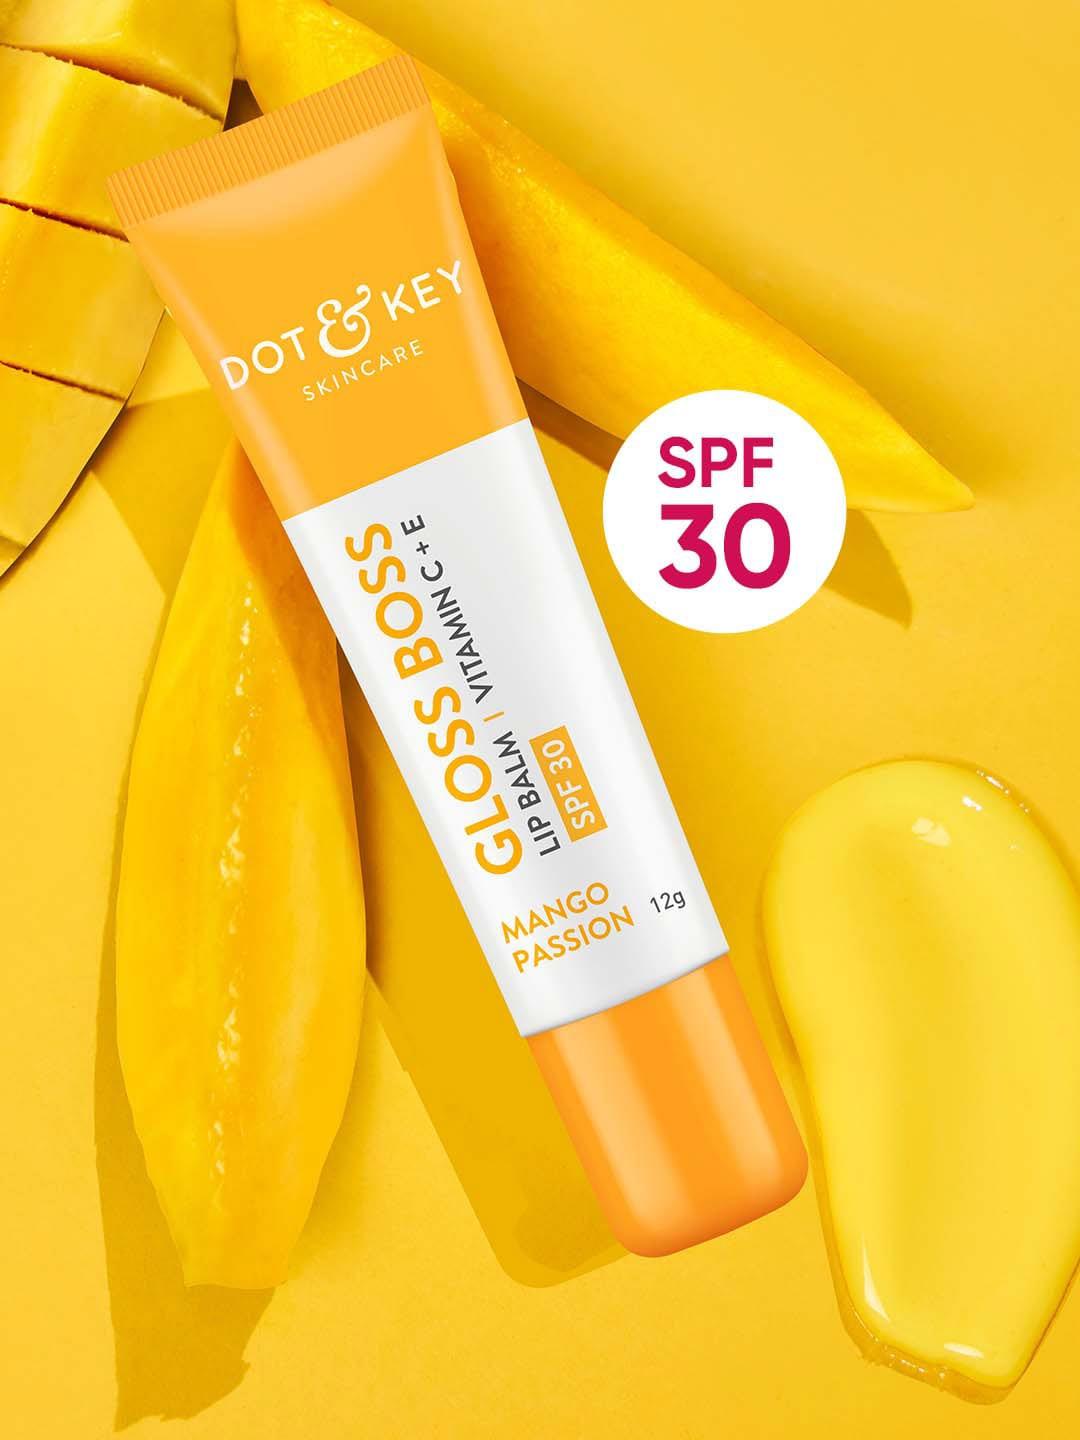 DOT & KEY Gloss Boss Vitamin C+E Tinted Lip Balm with SPF 30 12 g - Mango Passion